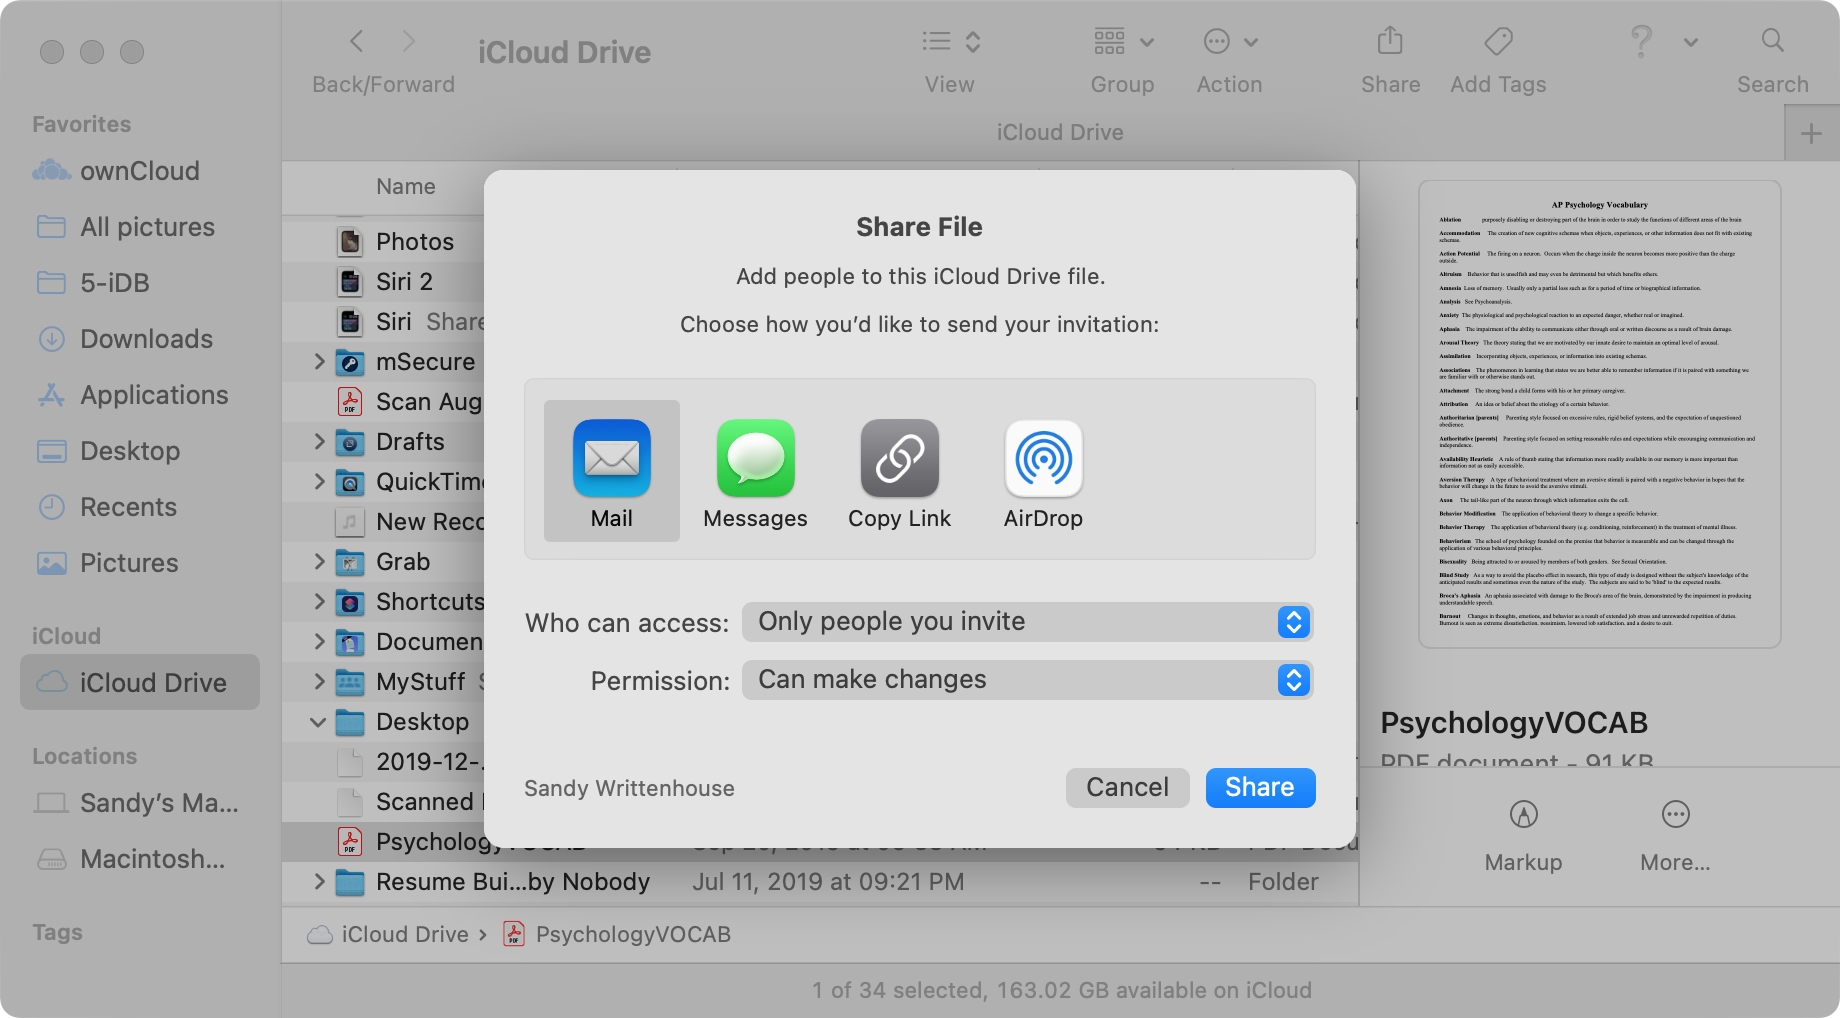 iCloud Drive Folder on Mac to Share Files